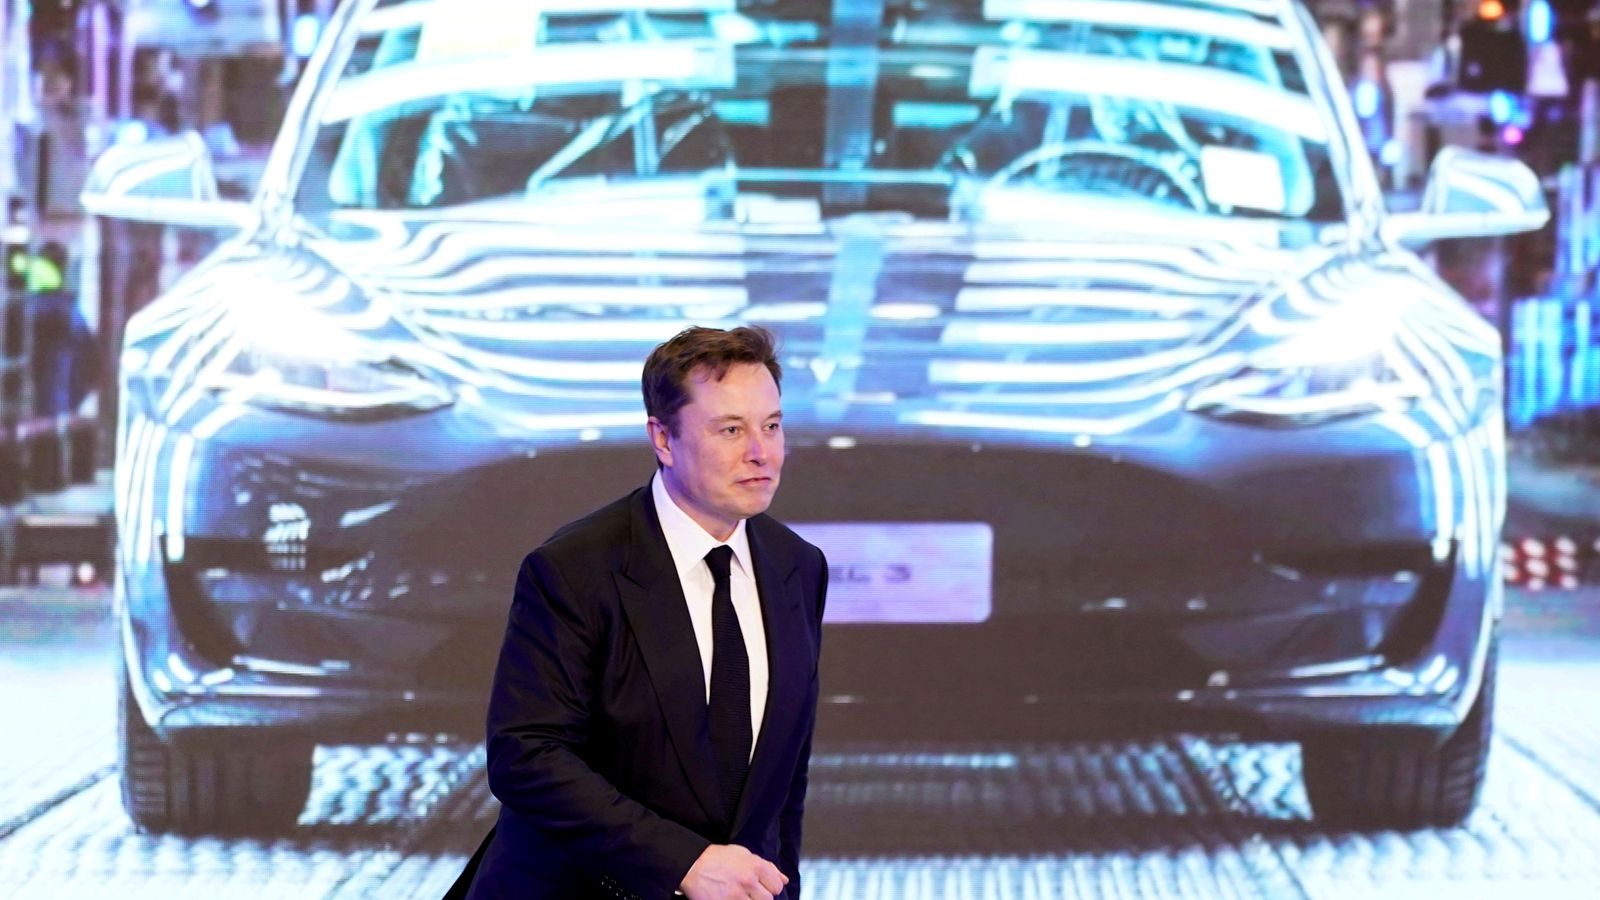 Tesla: Hundreds complain about phantom braking - as Elon Musk says he has 'bad feeling' about economy